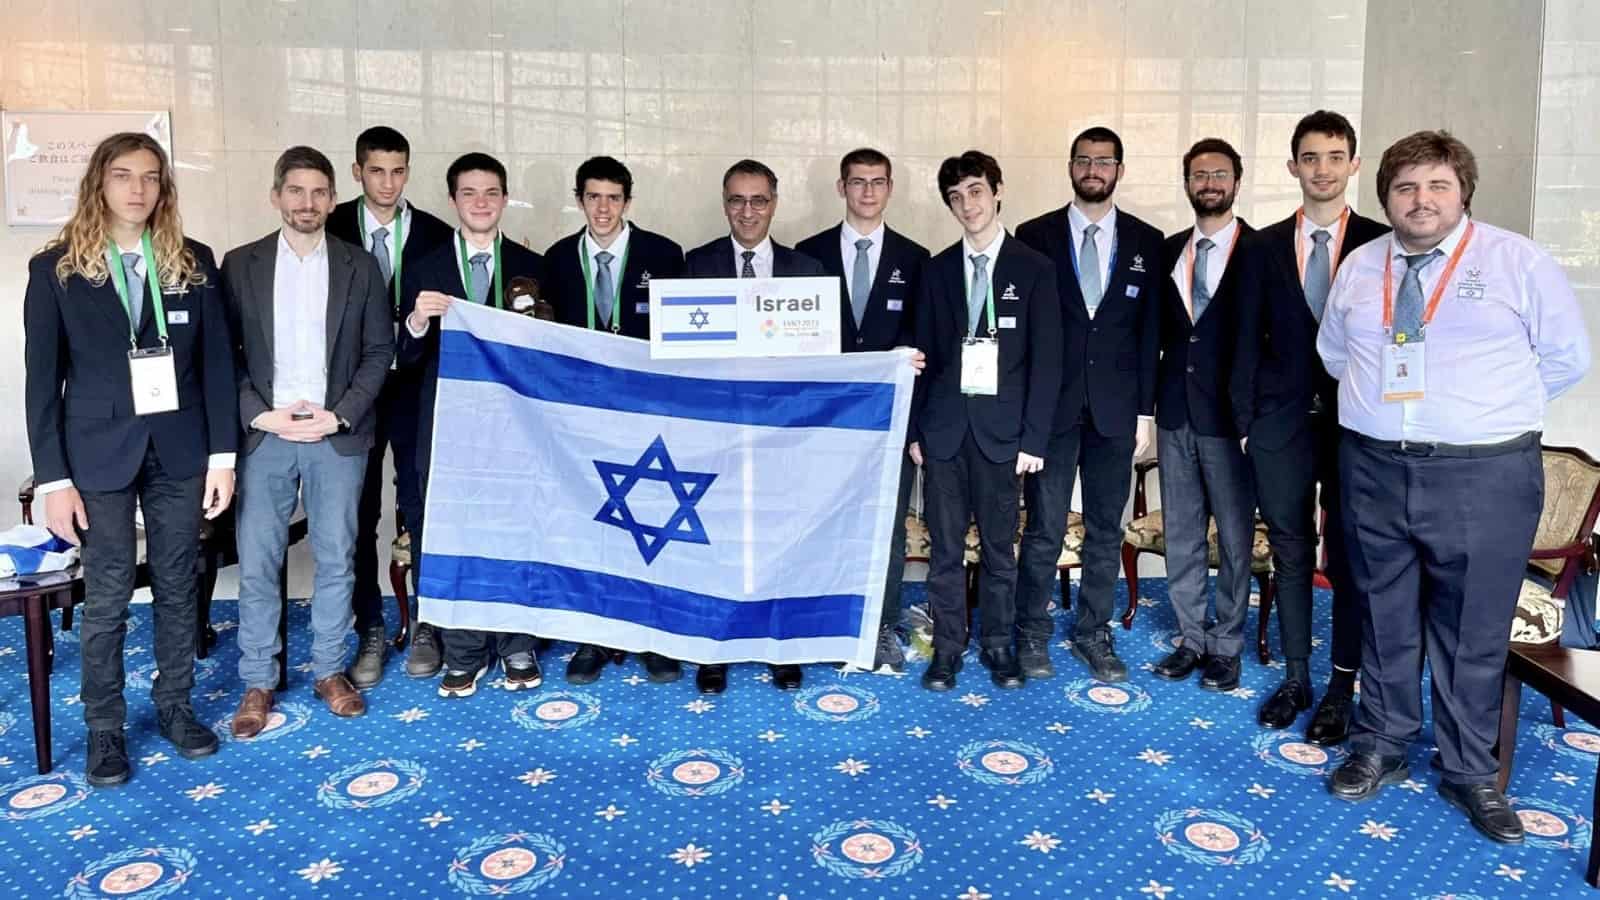 Israelâ€™s high school team at the International Mathematics Olympiad in Japan, July 2023.